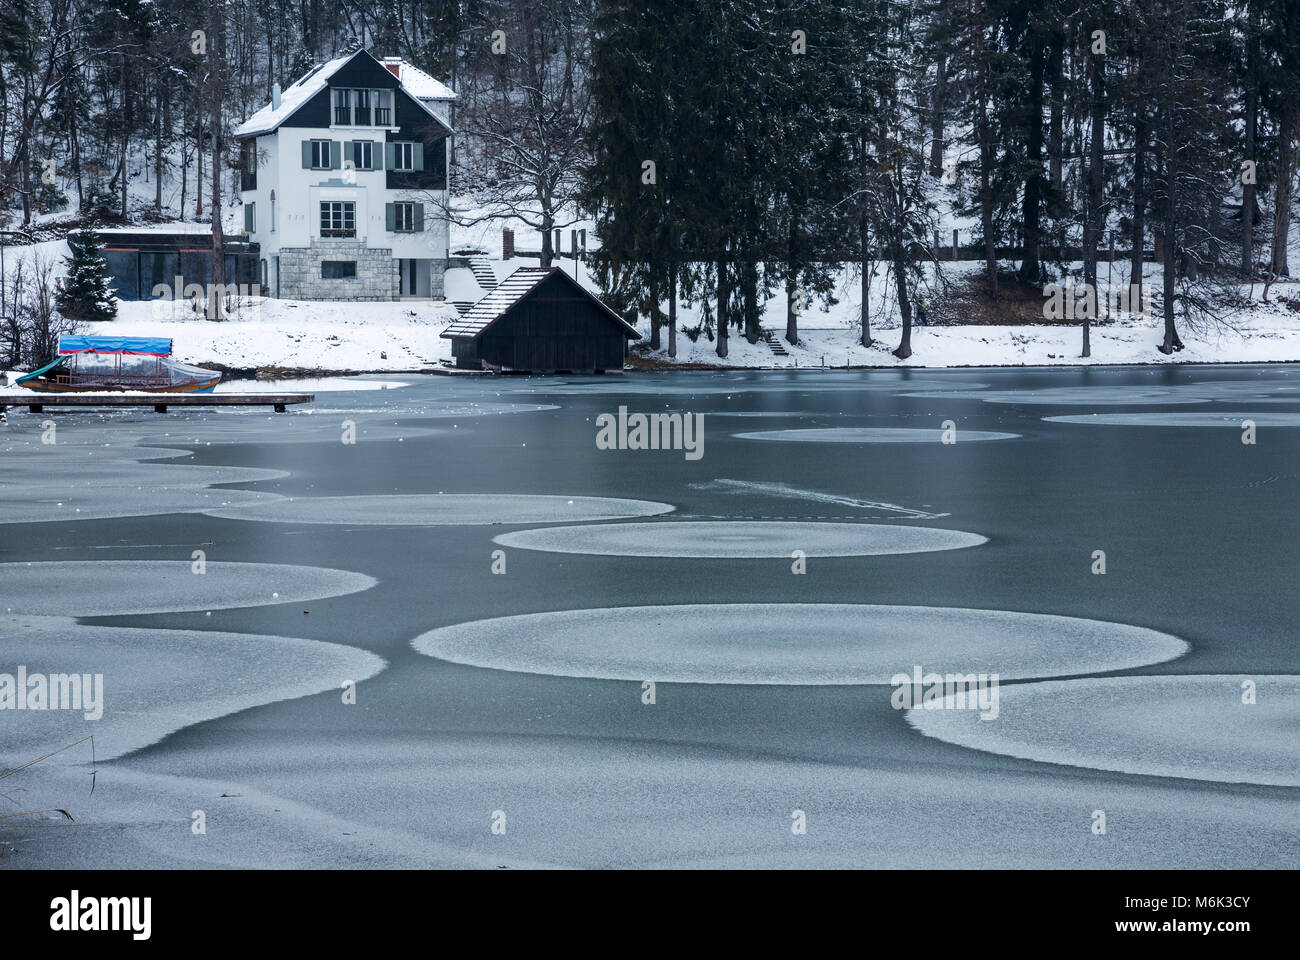 https://c8.alamy.com/comp/M6K3CY/lake-bled-slovenia-4th-mar-2018-ice-circles-on-a-frozen-lake-bled-M6K3CY.jpg